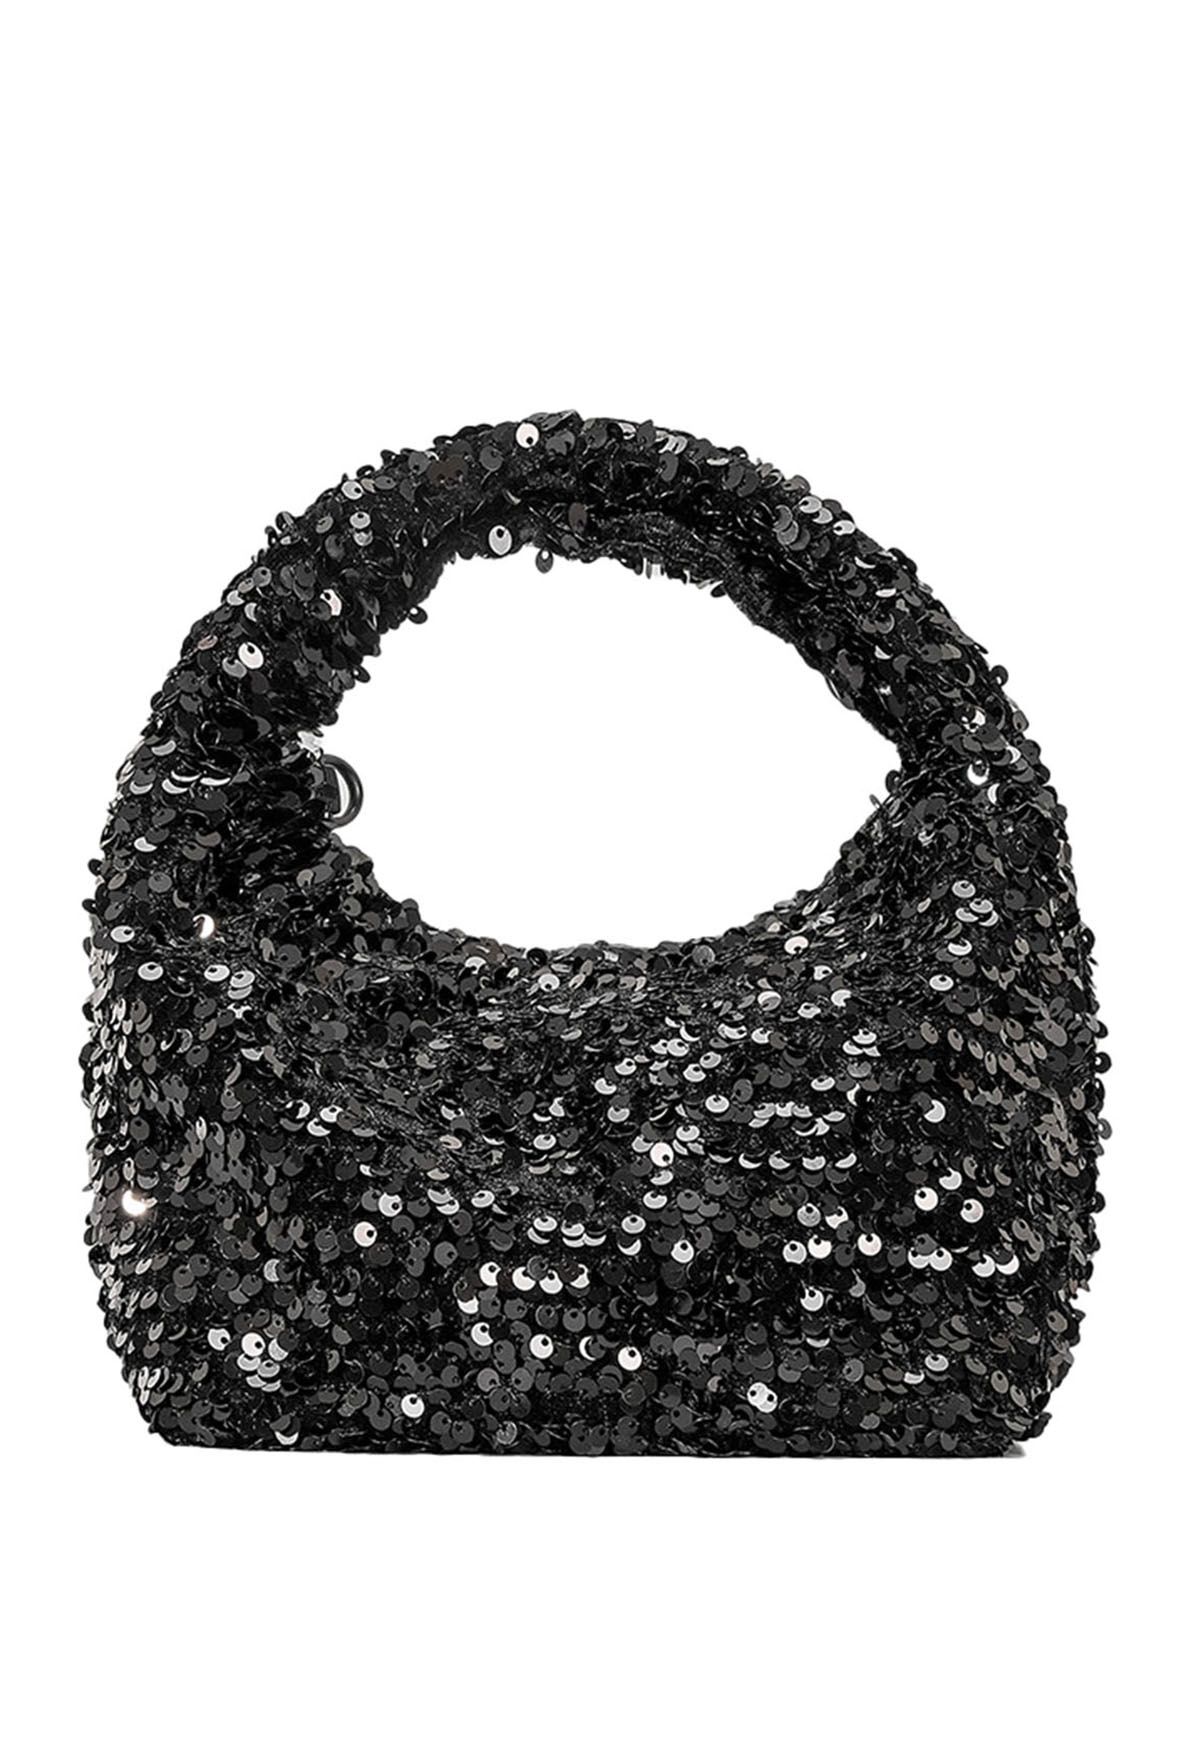 Glamorous Sequin Mini Handbag in Black - Retro, Indie and Unique Fashion